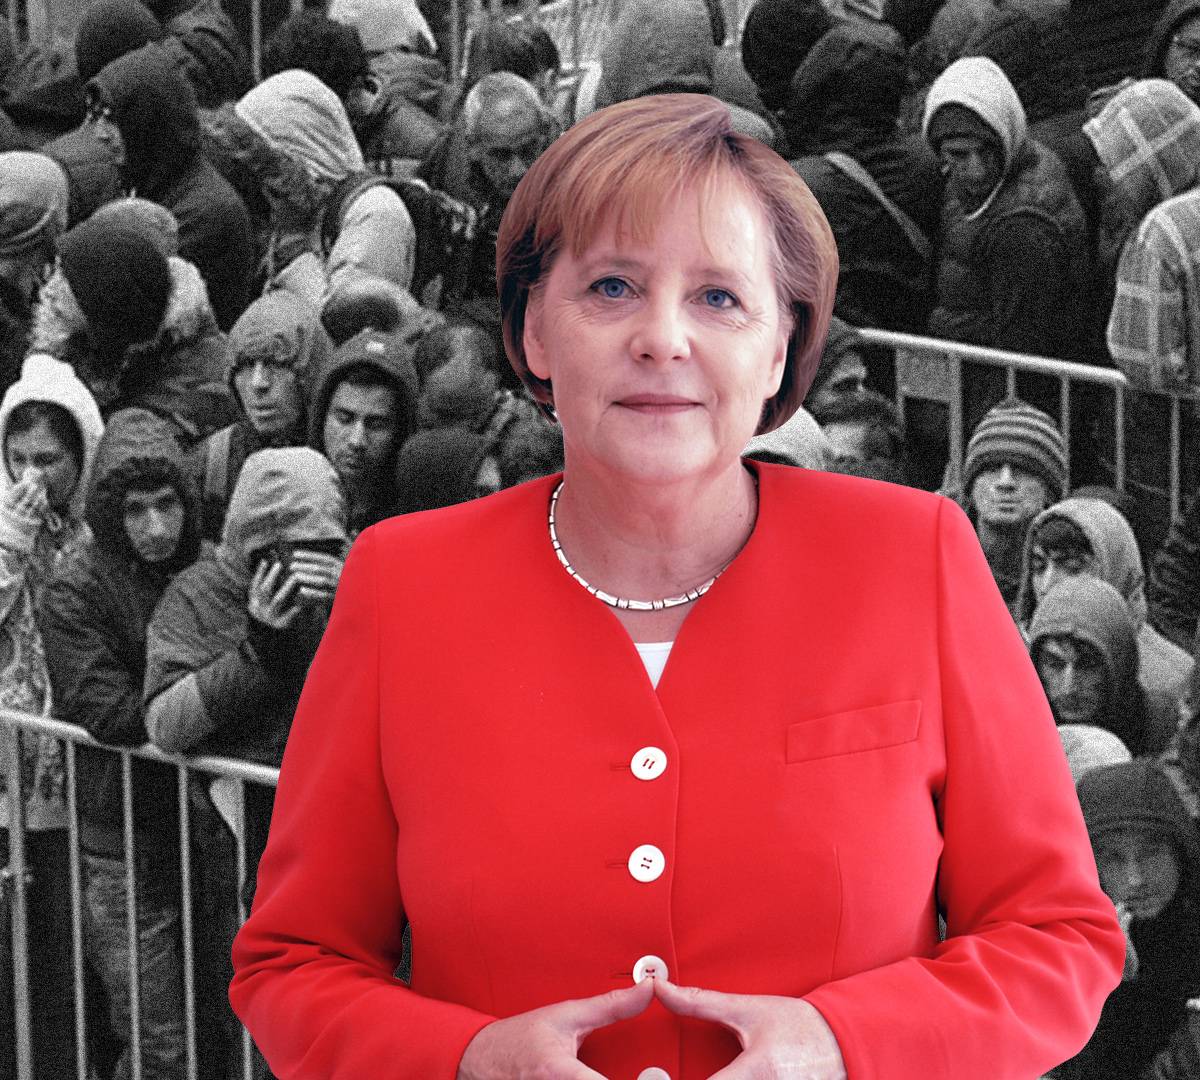 Die Welt официально заявил о замене немцев на мигрантов